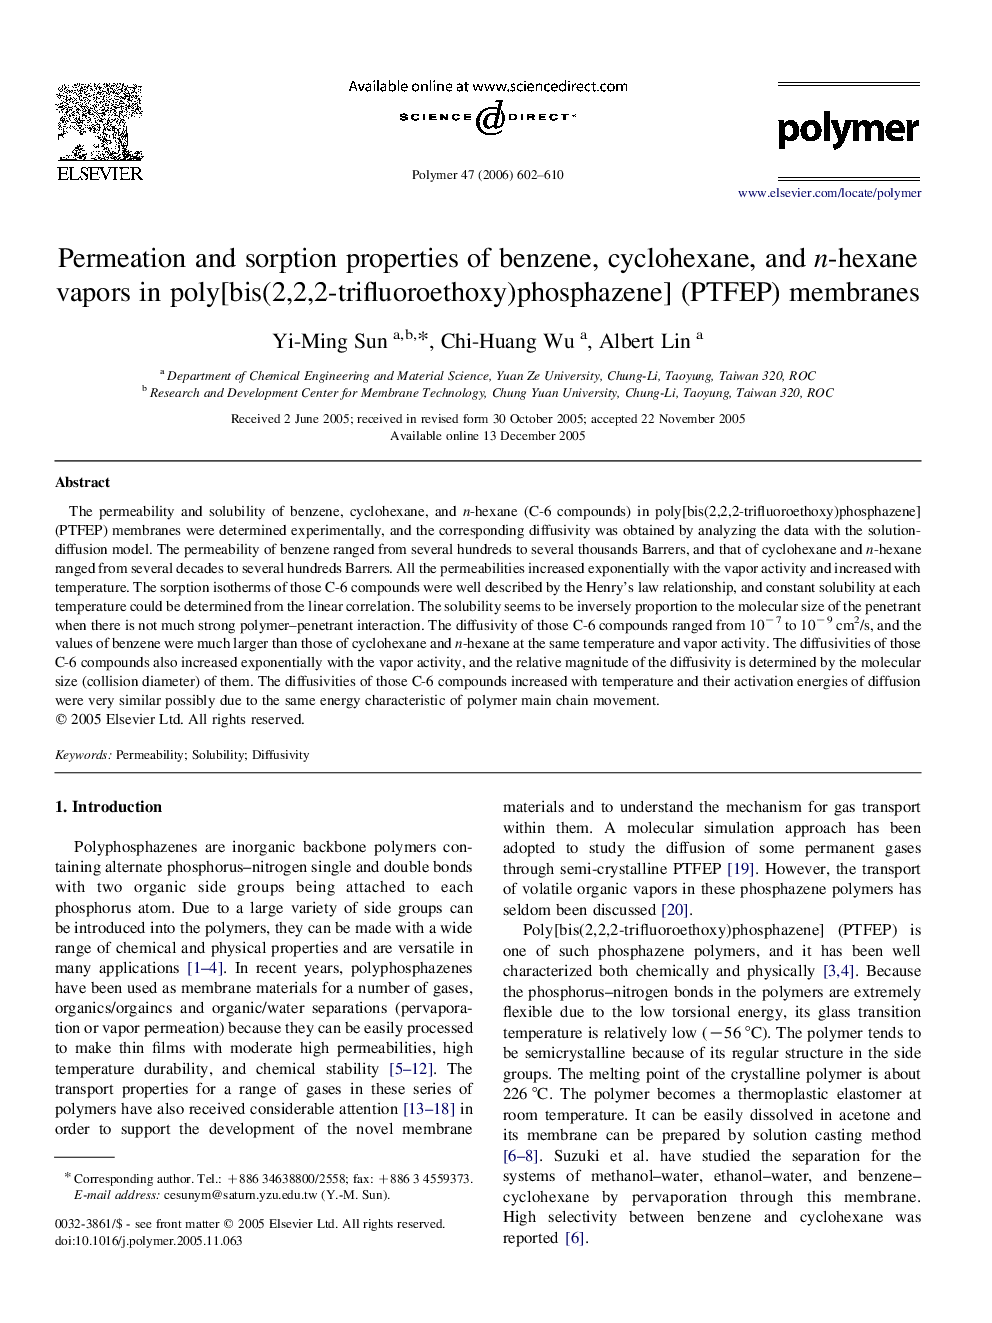 Permeation and sorption properties of benzene, cyclohexane, and n-hexane vapors in poly[bis(2,2,2-trifluoroethoxy)phosphazene] (PTFEP) membranes